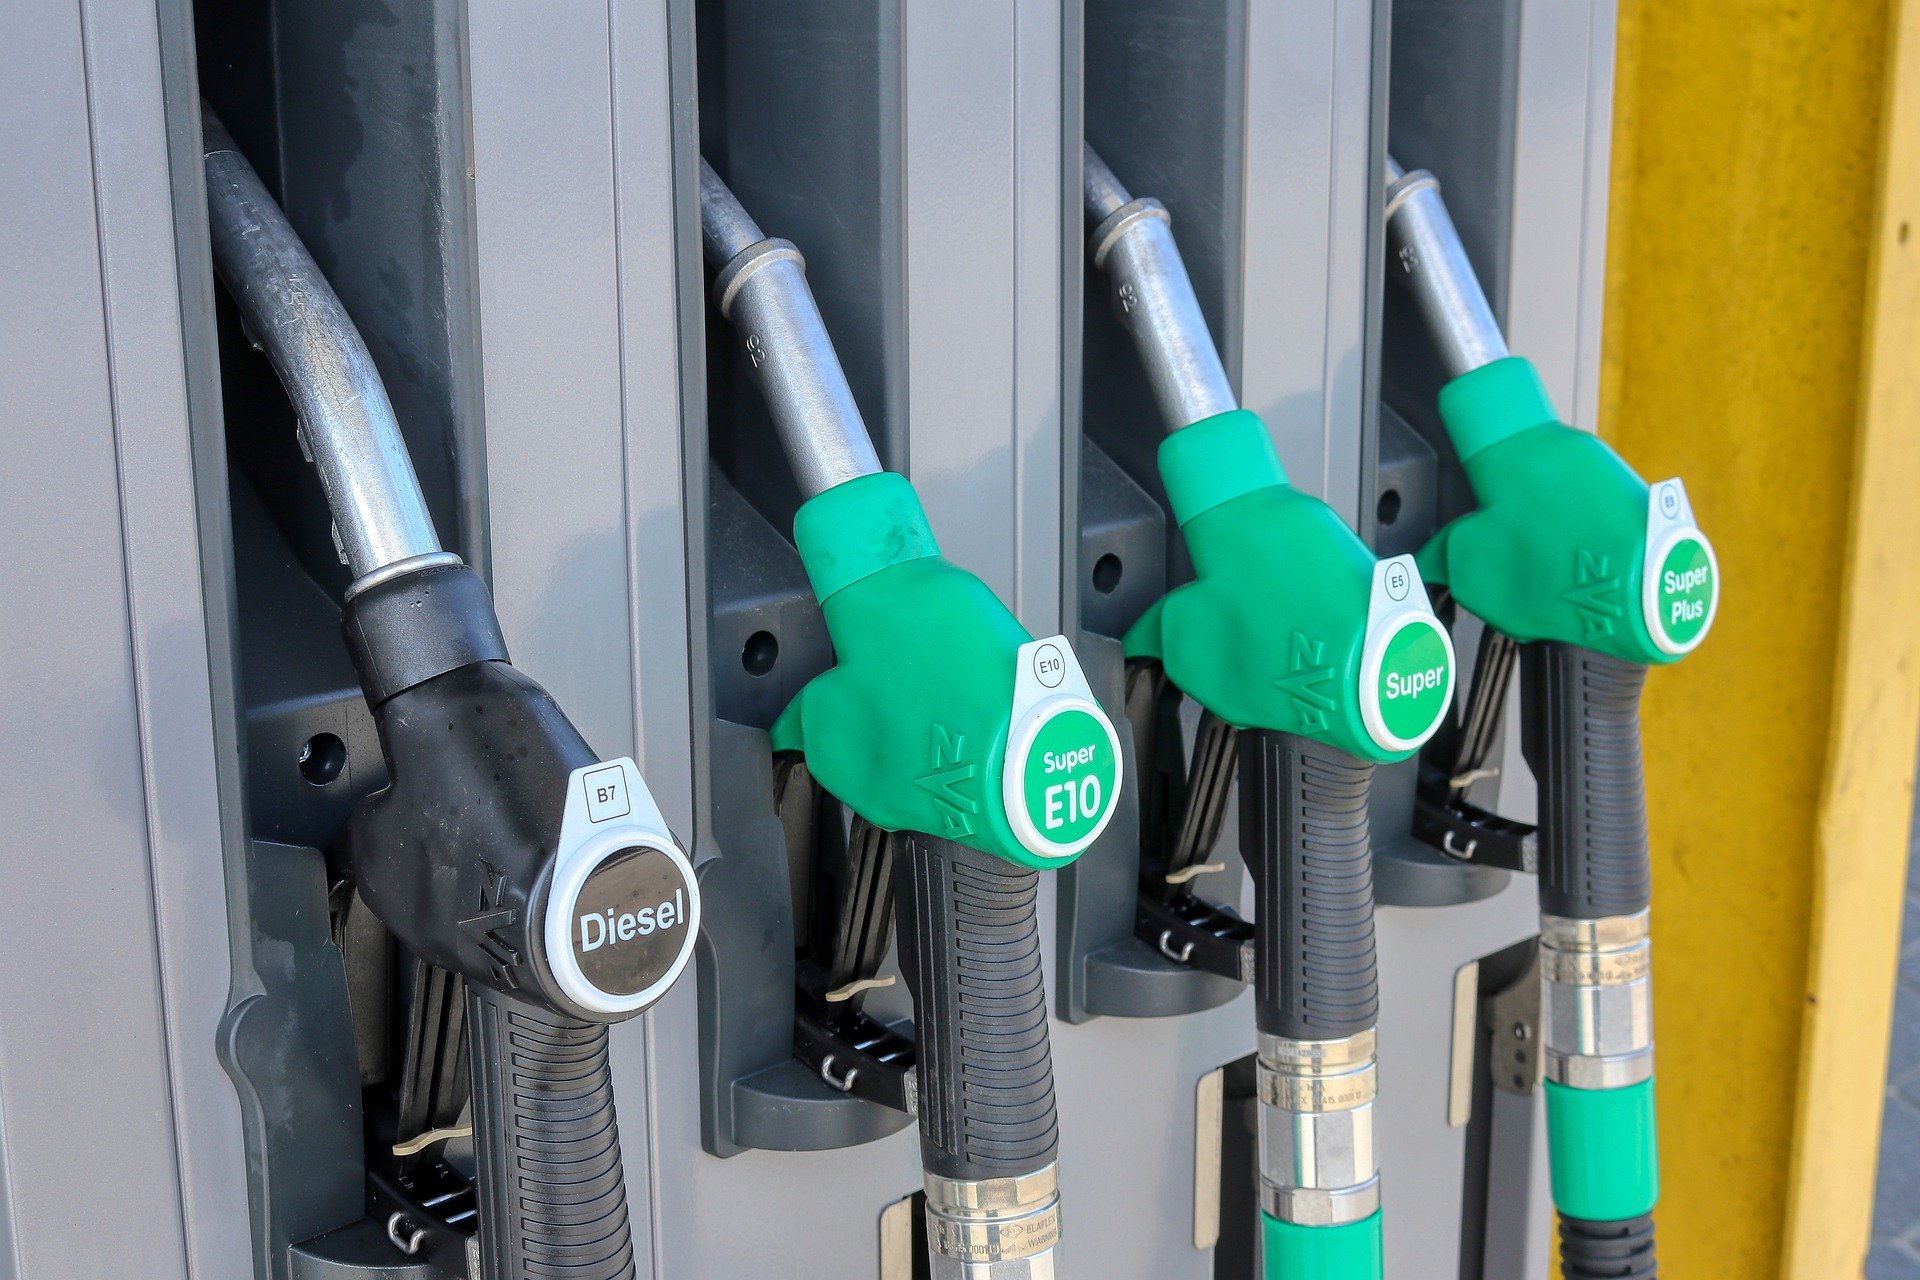 Prices of diesel fuel, gasoline, LPG